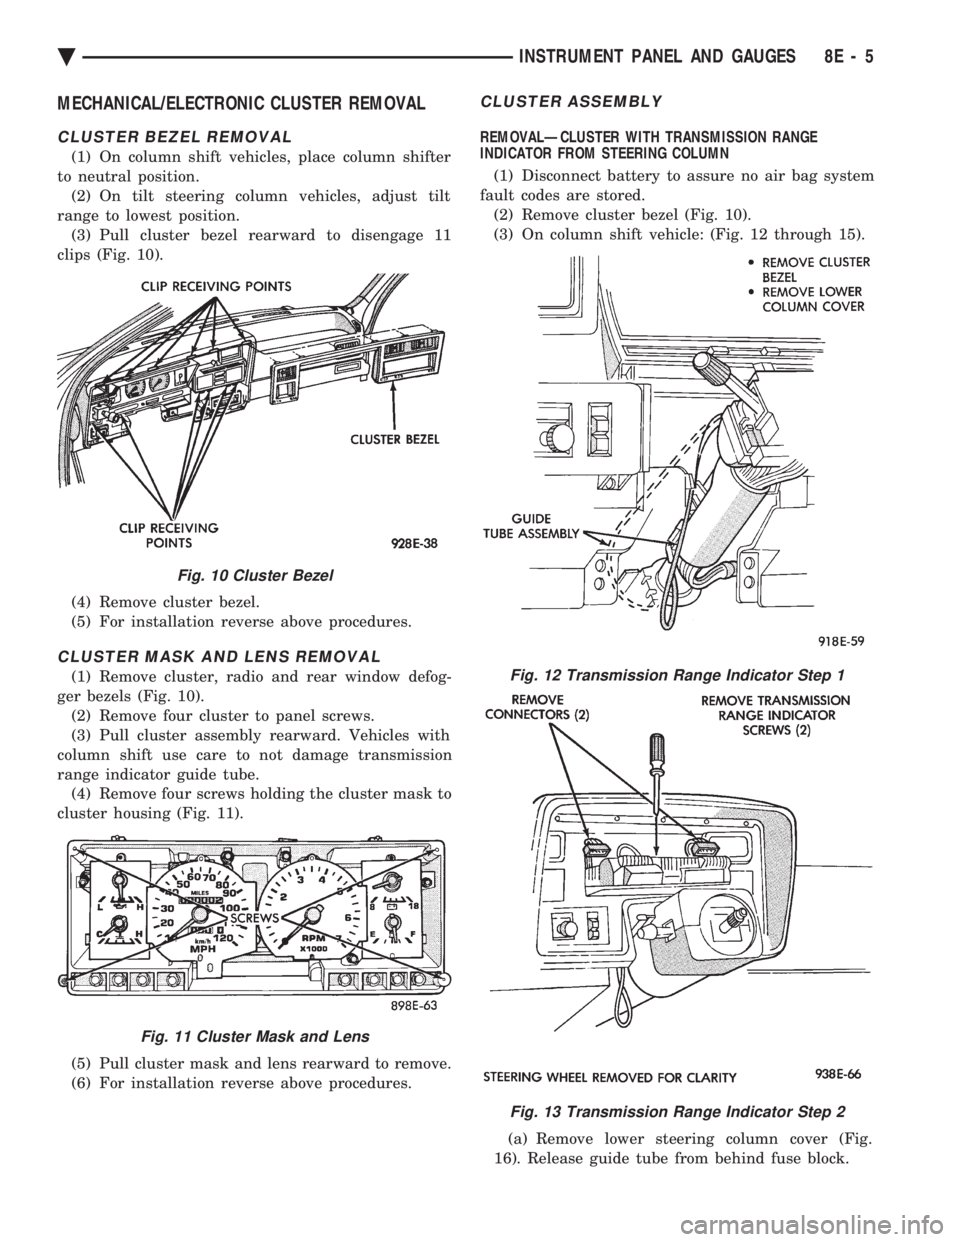 CHEVROLET DYNASTY 1993  Service Manual MECHANICAL/ELECTRONIC CLUSTER REMOVAL
CLUSTER BEZEL REMOVAL
(1) On column shift vehicles, place column shifter 
to neutral position. (2) On tilt steering column vehicles, adjust tilt
range to lowest p